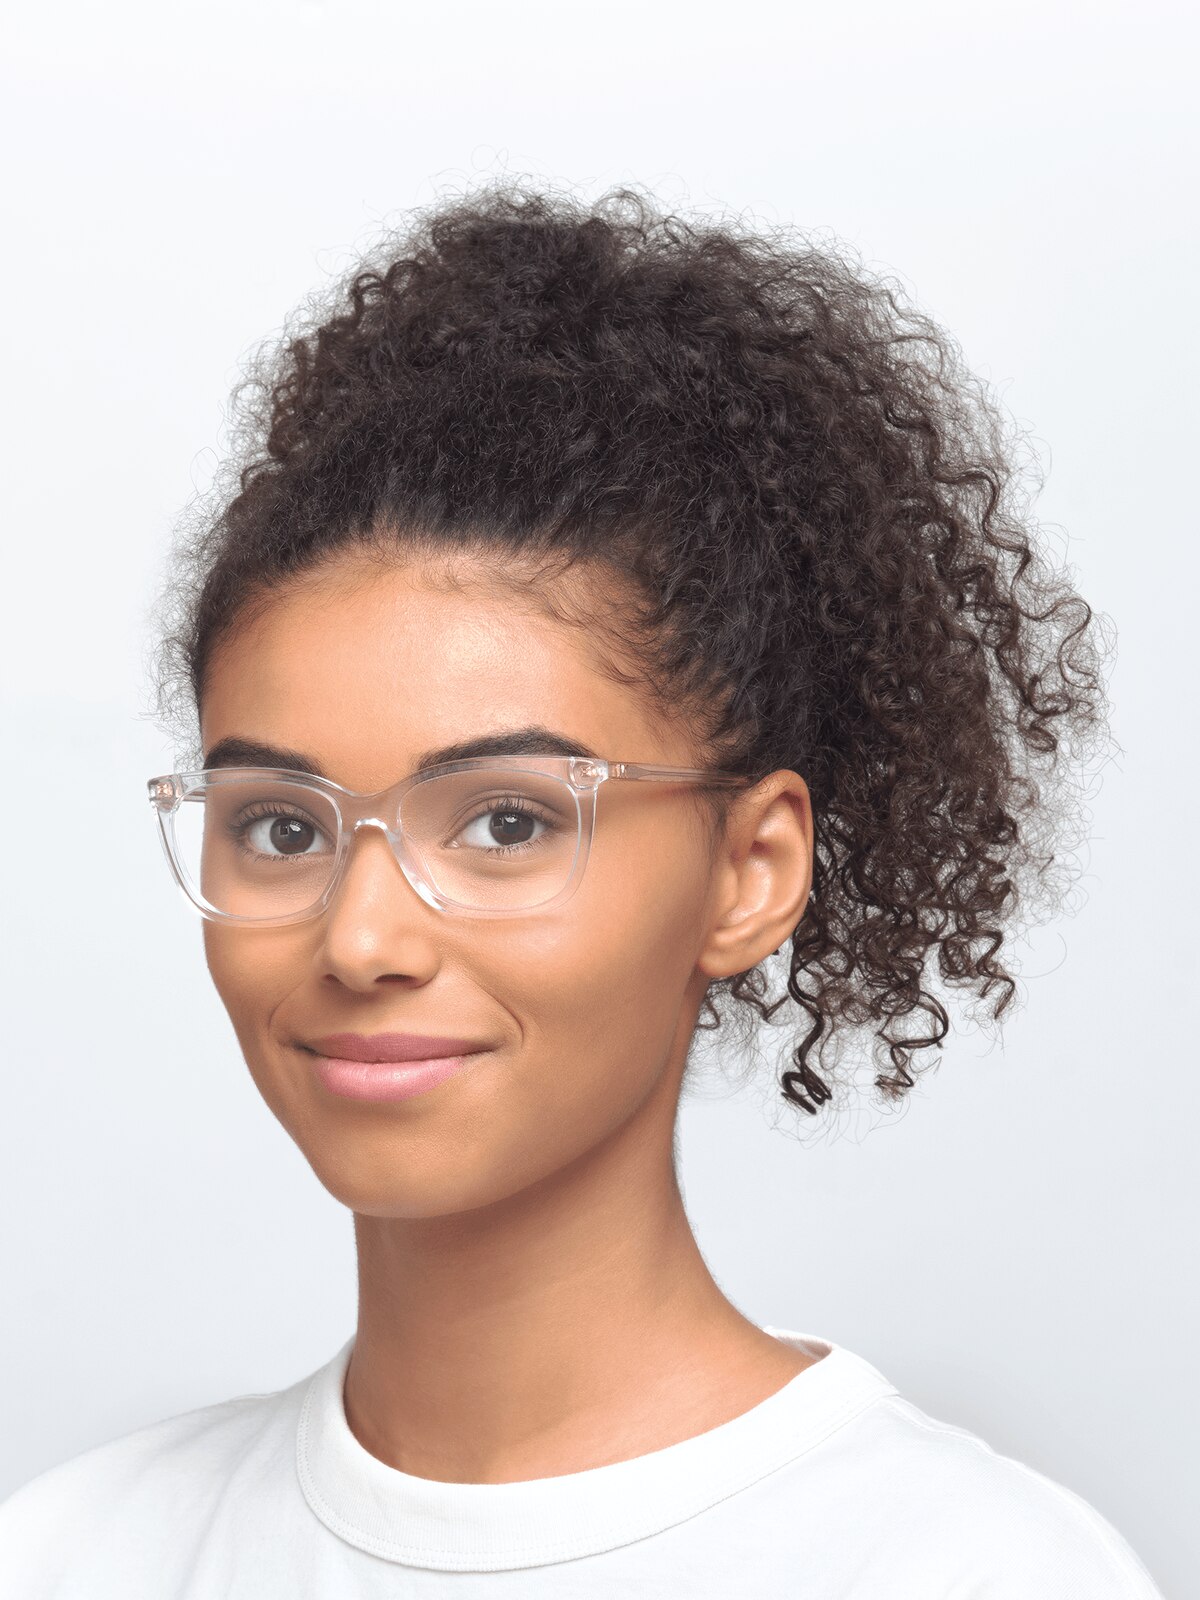 Amazoncom Michael Kors MK 4054 3105 Crystal Clear Eyeglasses Frame wDemo  lens52mm 5220140  Clothing Shoes  Jewelry